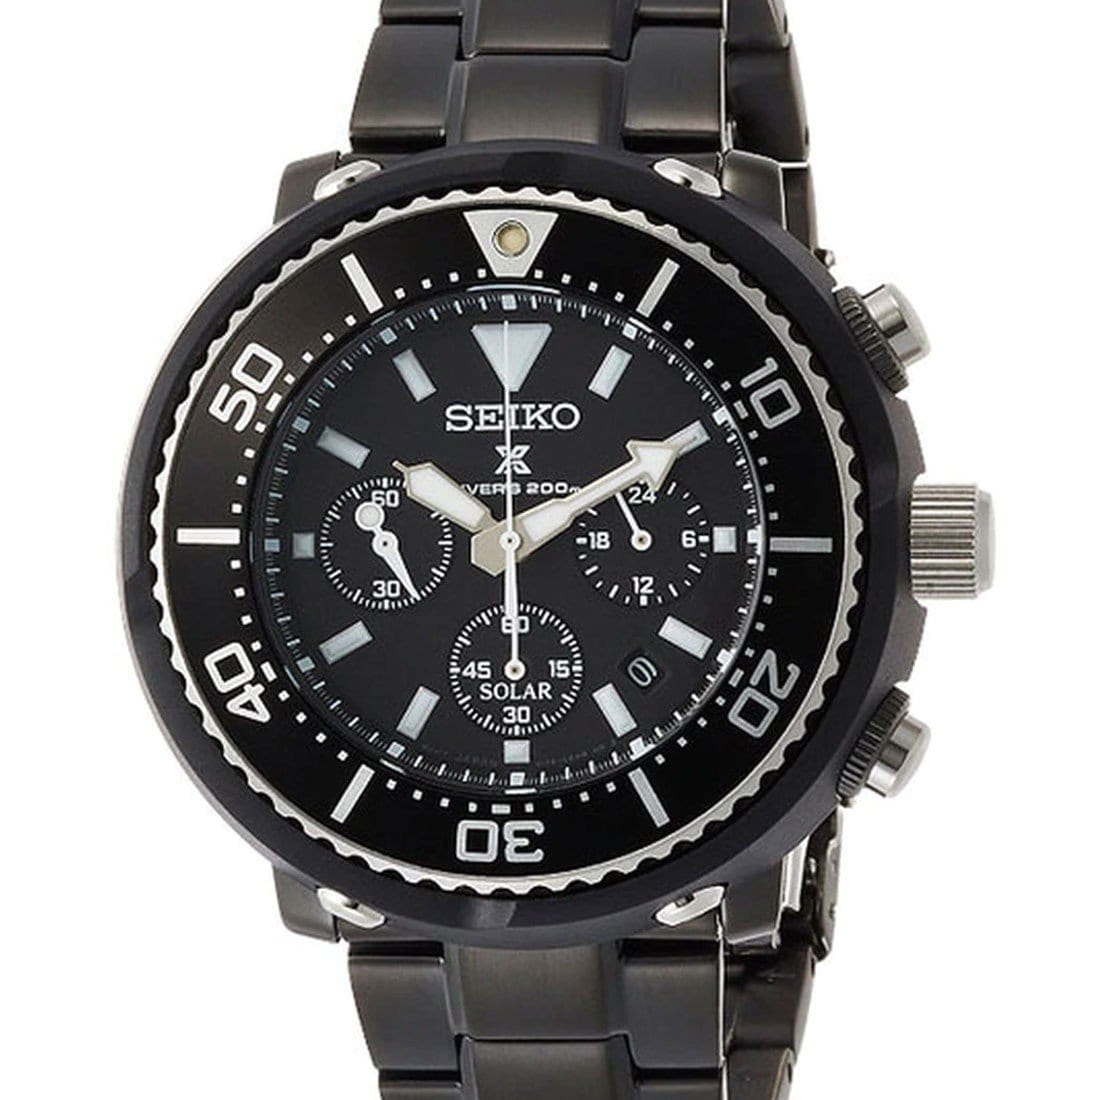 SBDL035 Seiko Prospex Solar 200M Chronograph Male Divers Watch